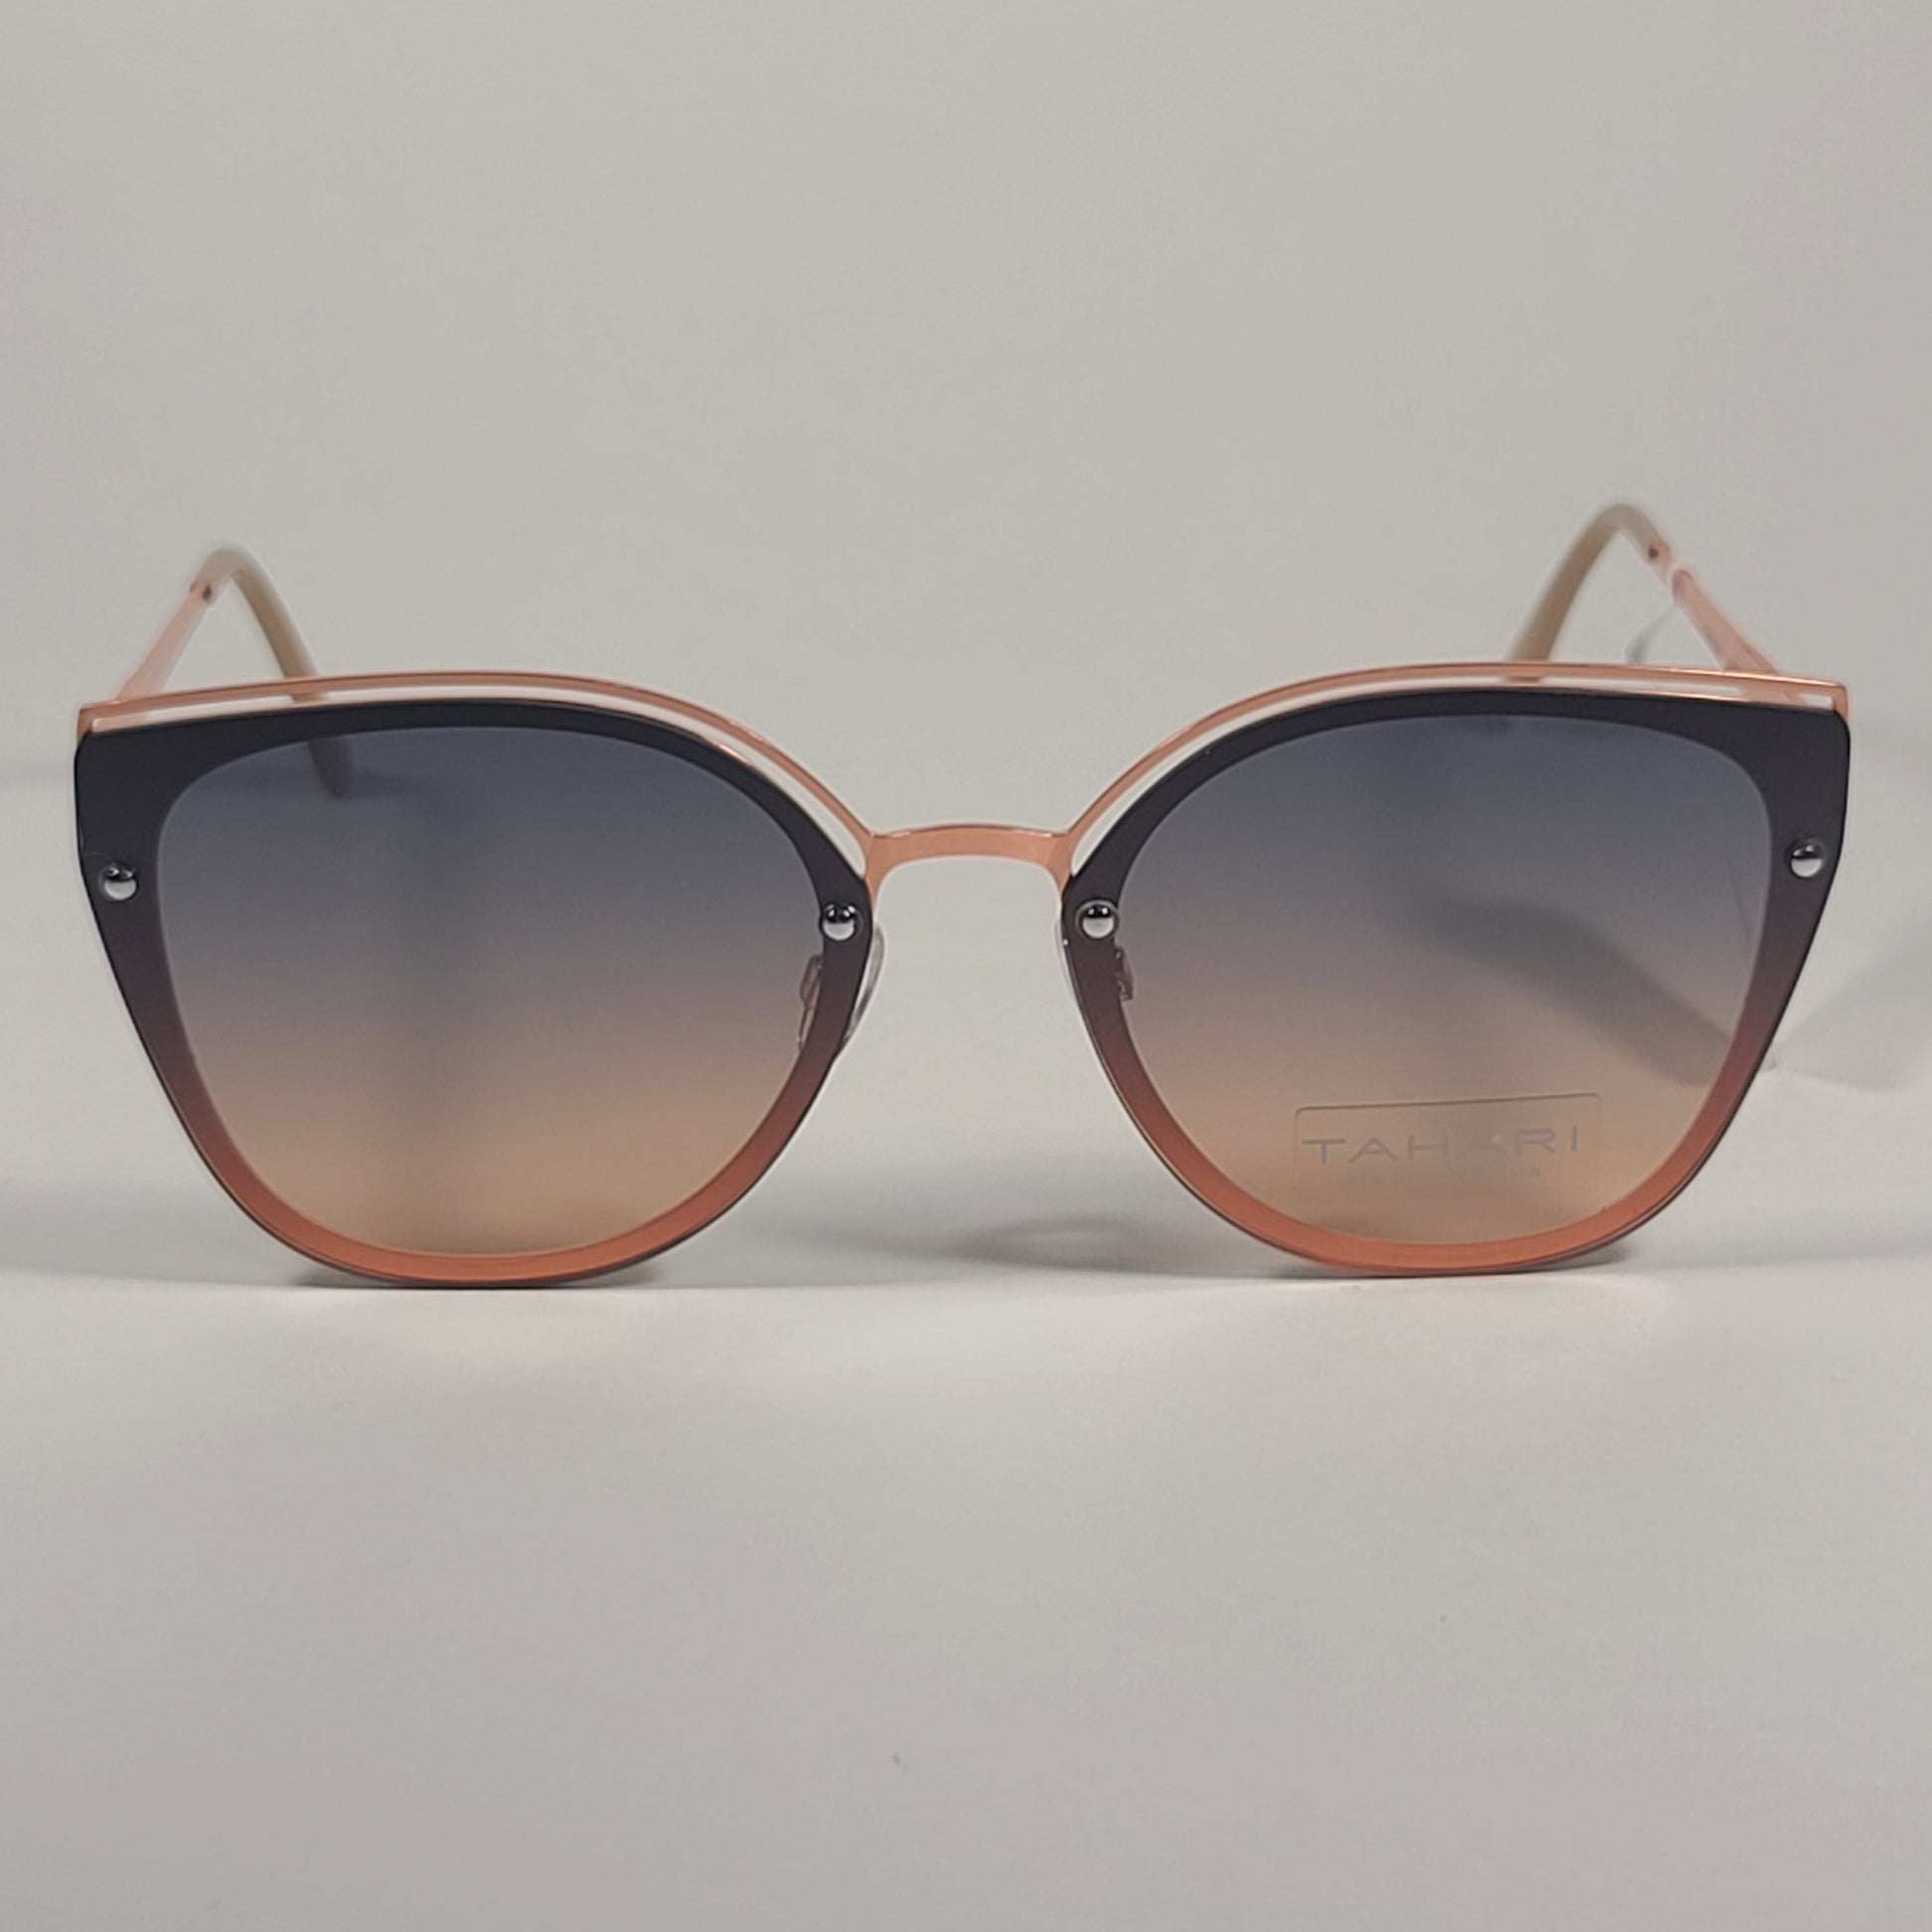 Tahari Rimless Cat Eye Sunglasses Rose Gold Nude Frame Gradient Lens TH809 RGDND - Sunglasses